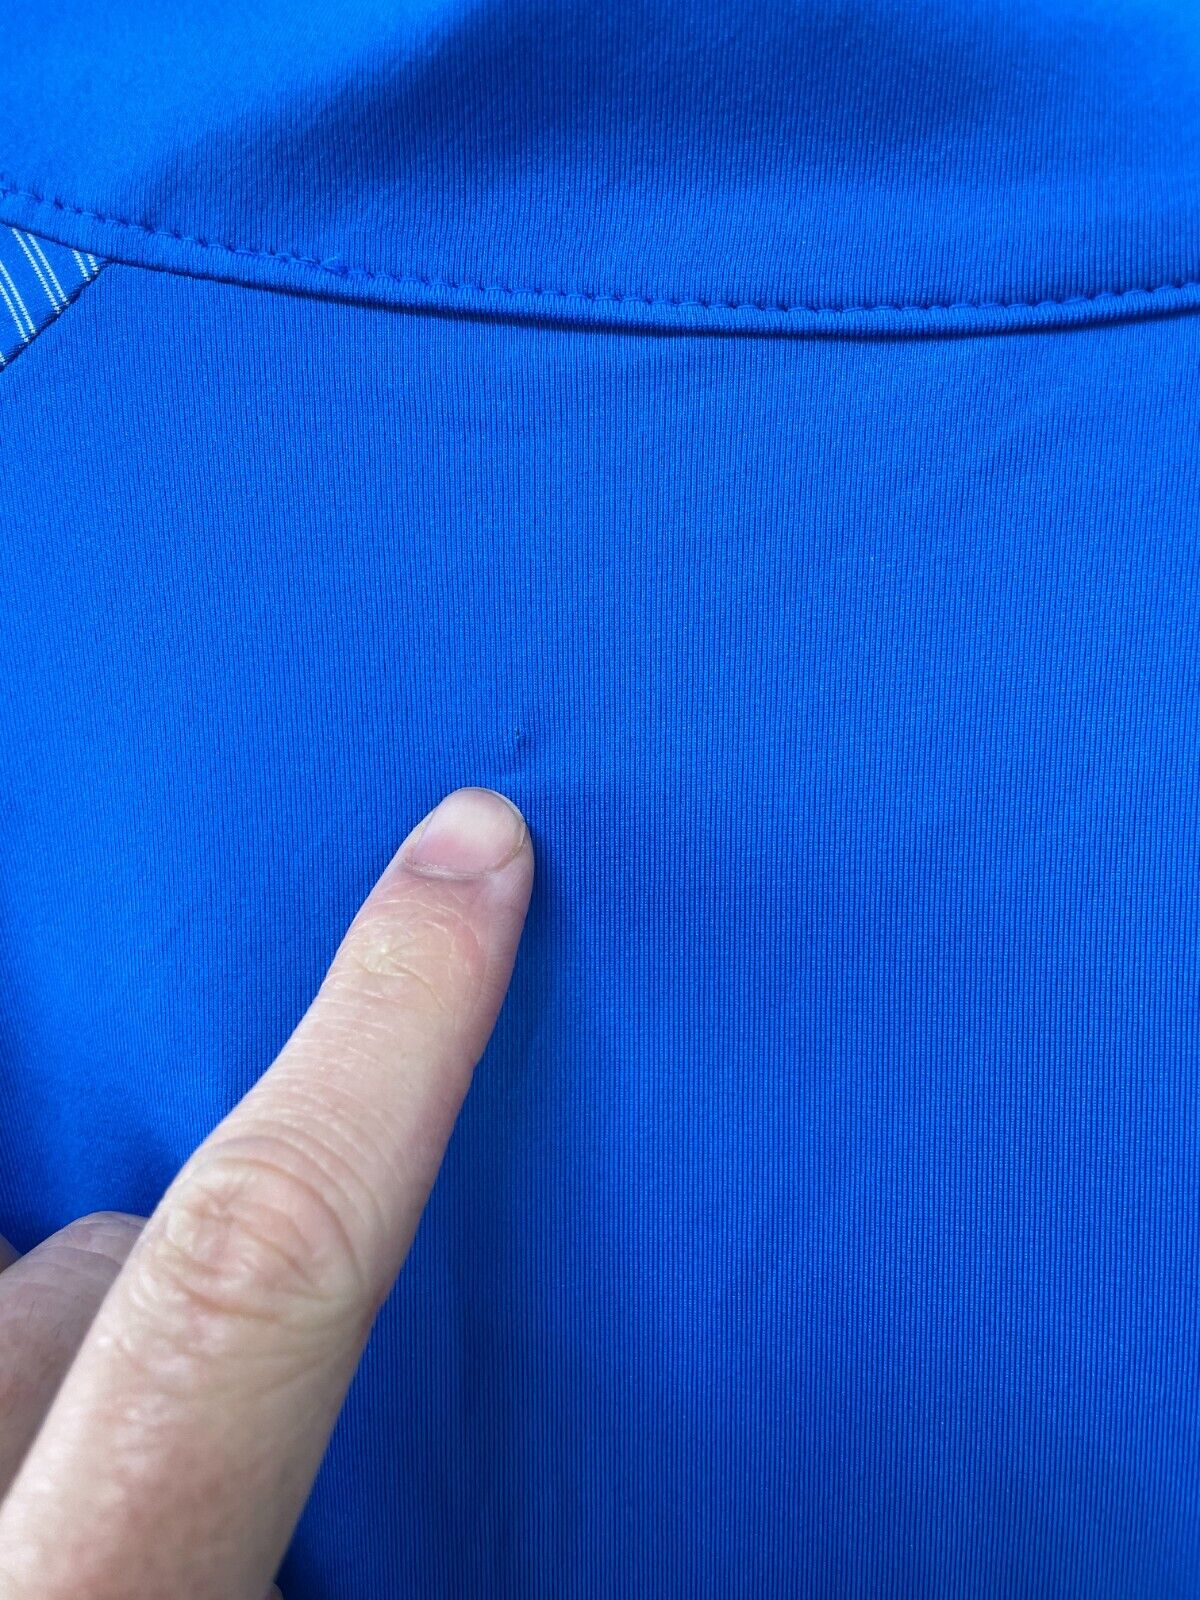 Adidas Mens 3XL A520 Shoulder Stripe Quarter-Zip Pullover Sweatshirt Golf Blue